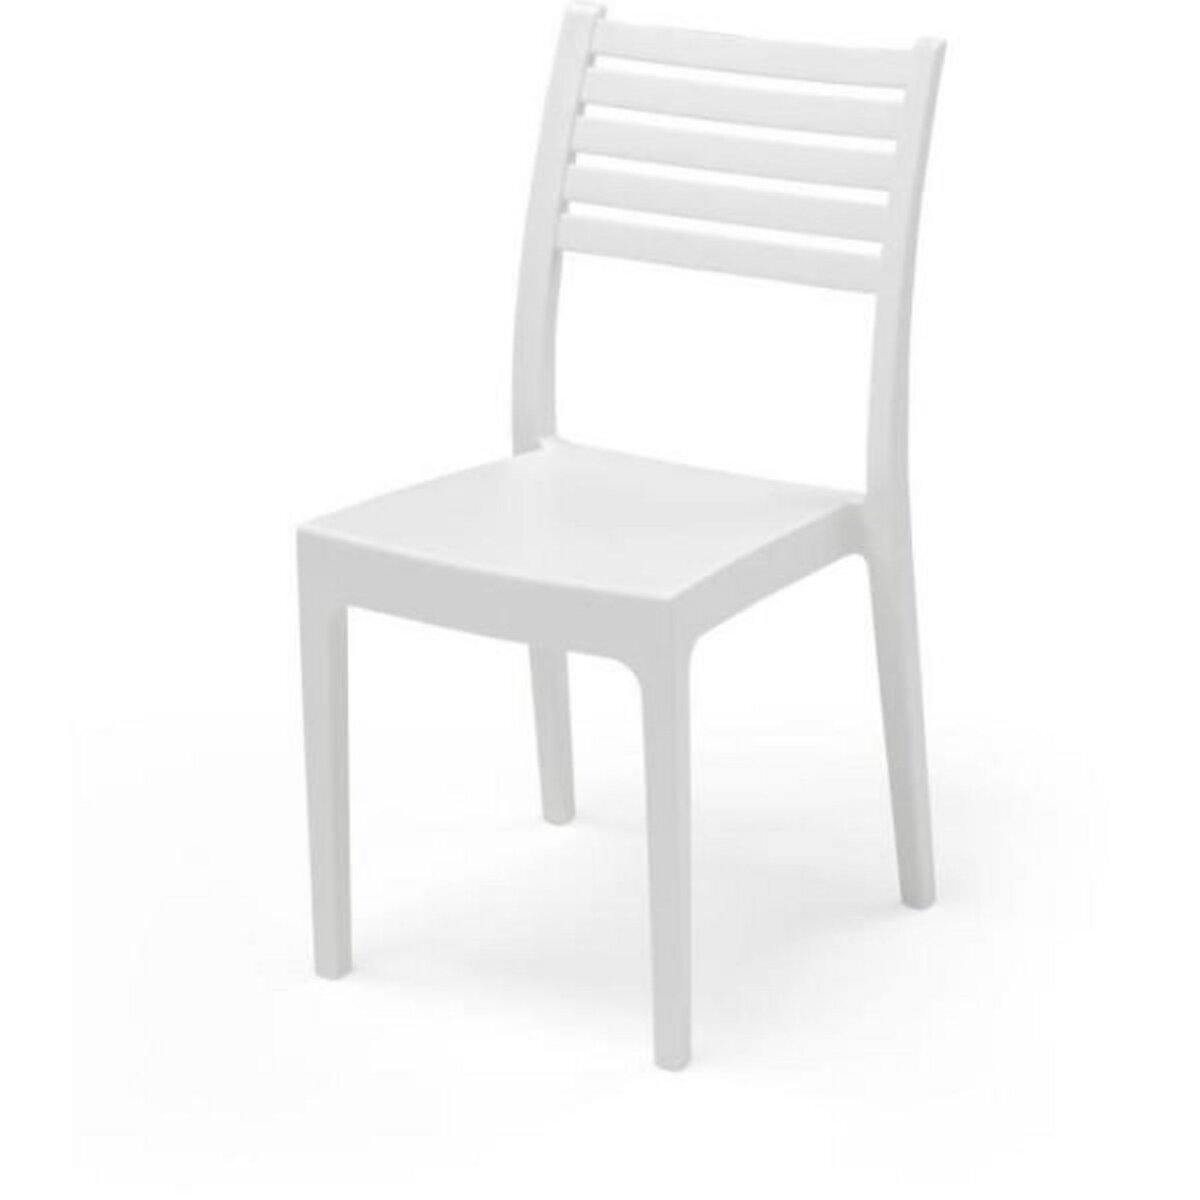 MARKET24 Lot de 4 chaises de jardin OLIMPIA ARETA - 52 x 46 x H 86 cm - Blanc